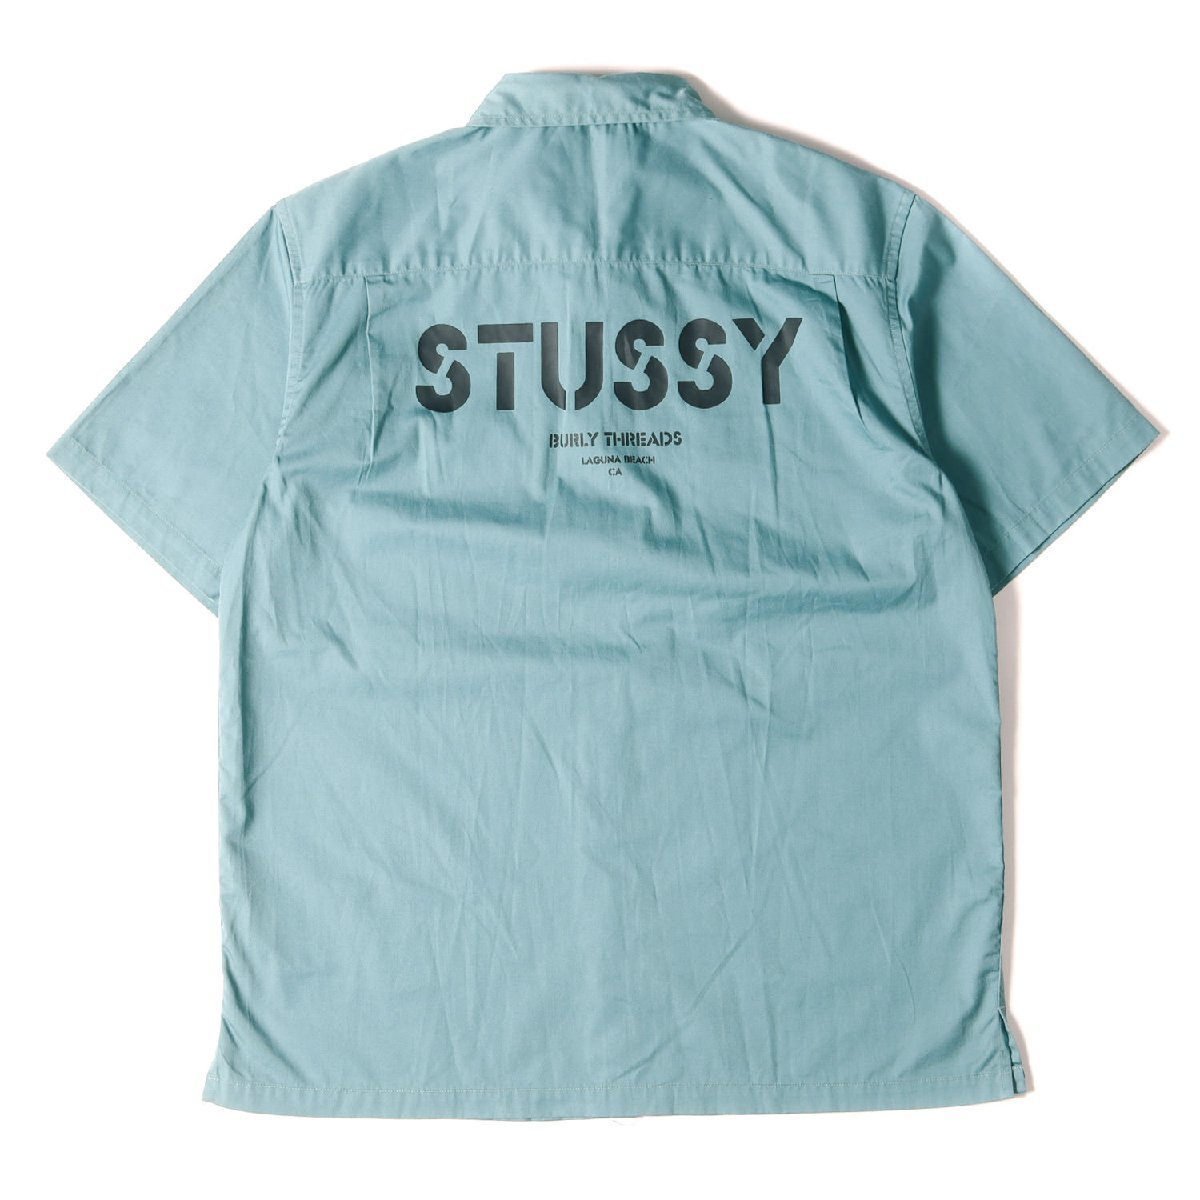 STUSSY ステューシー シャツ サイズ:M ブランドロゴ T/Cツイル ワーク 半袖 シャツ ティール トップス カジュアルシャツ ストリート